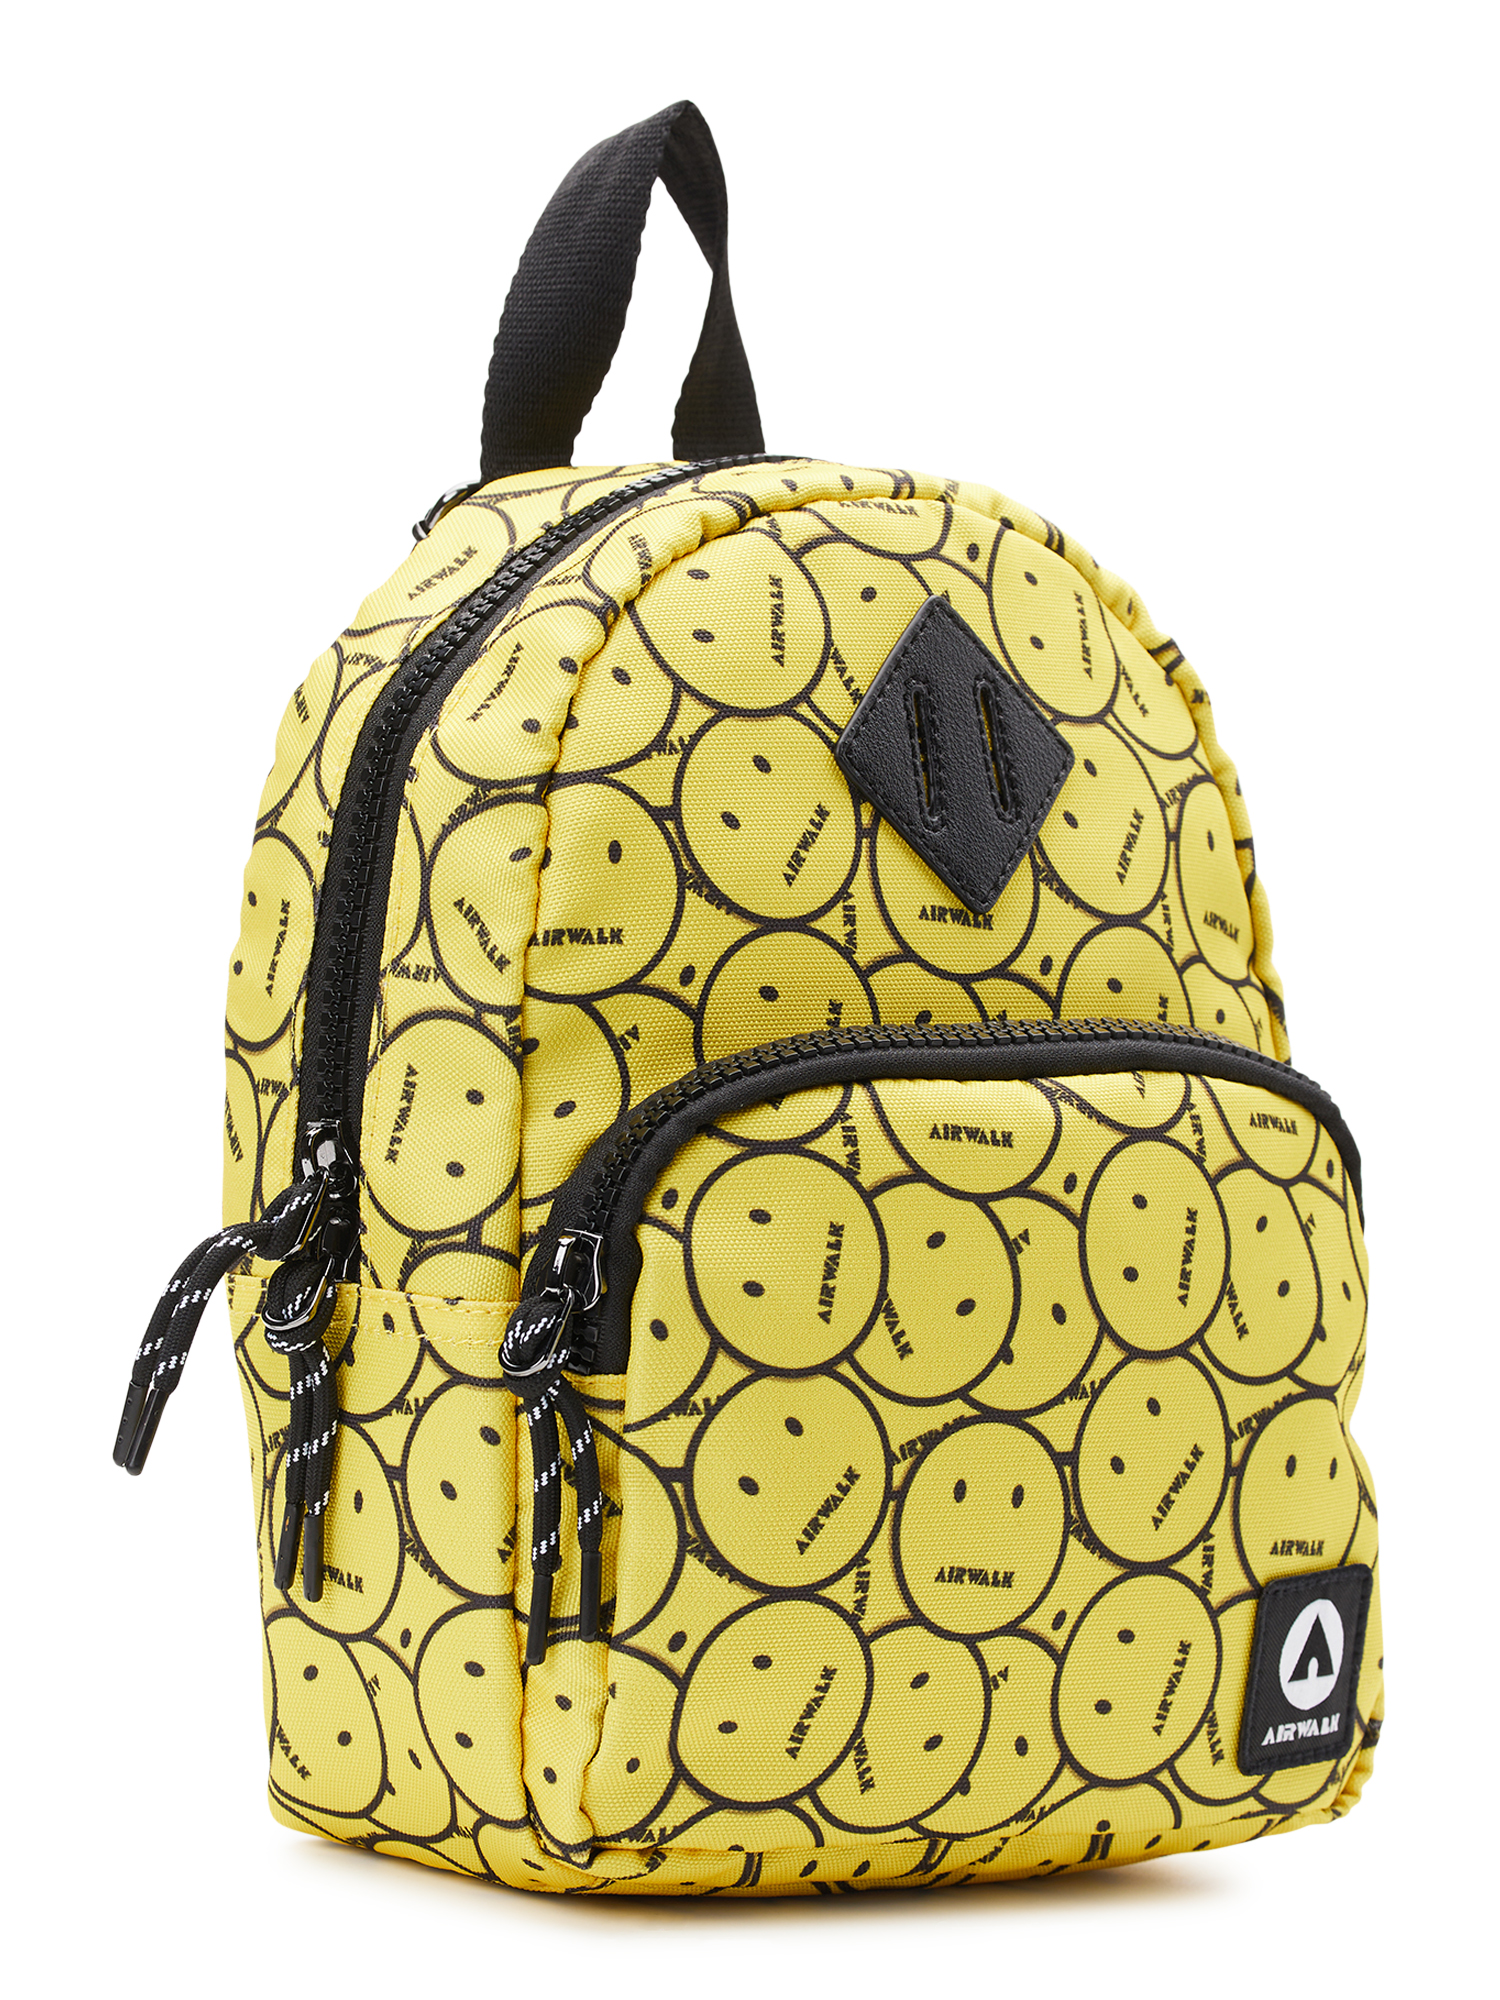 Airwalk Unisex Mini 10" Backpack, Smiley Yellow - image 5 of 6